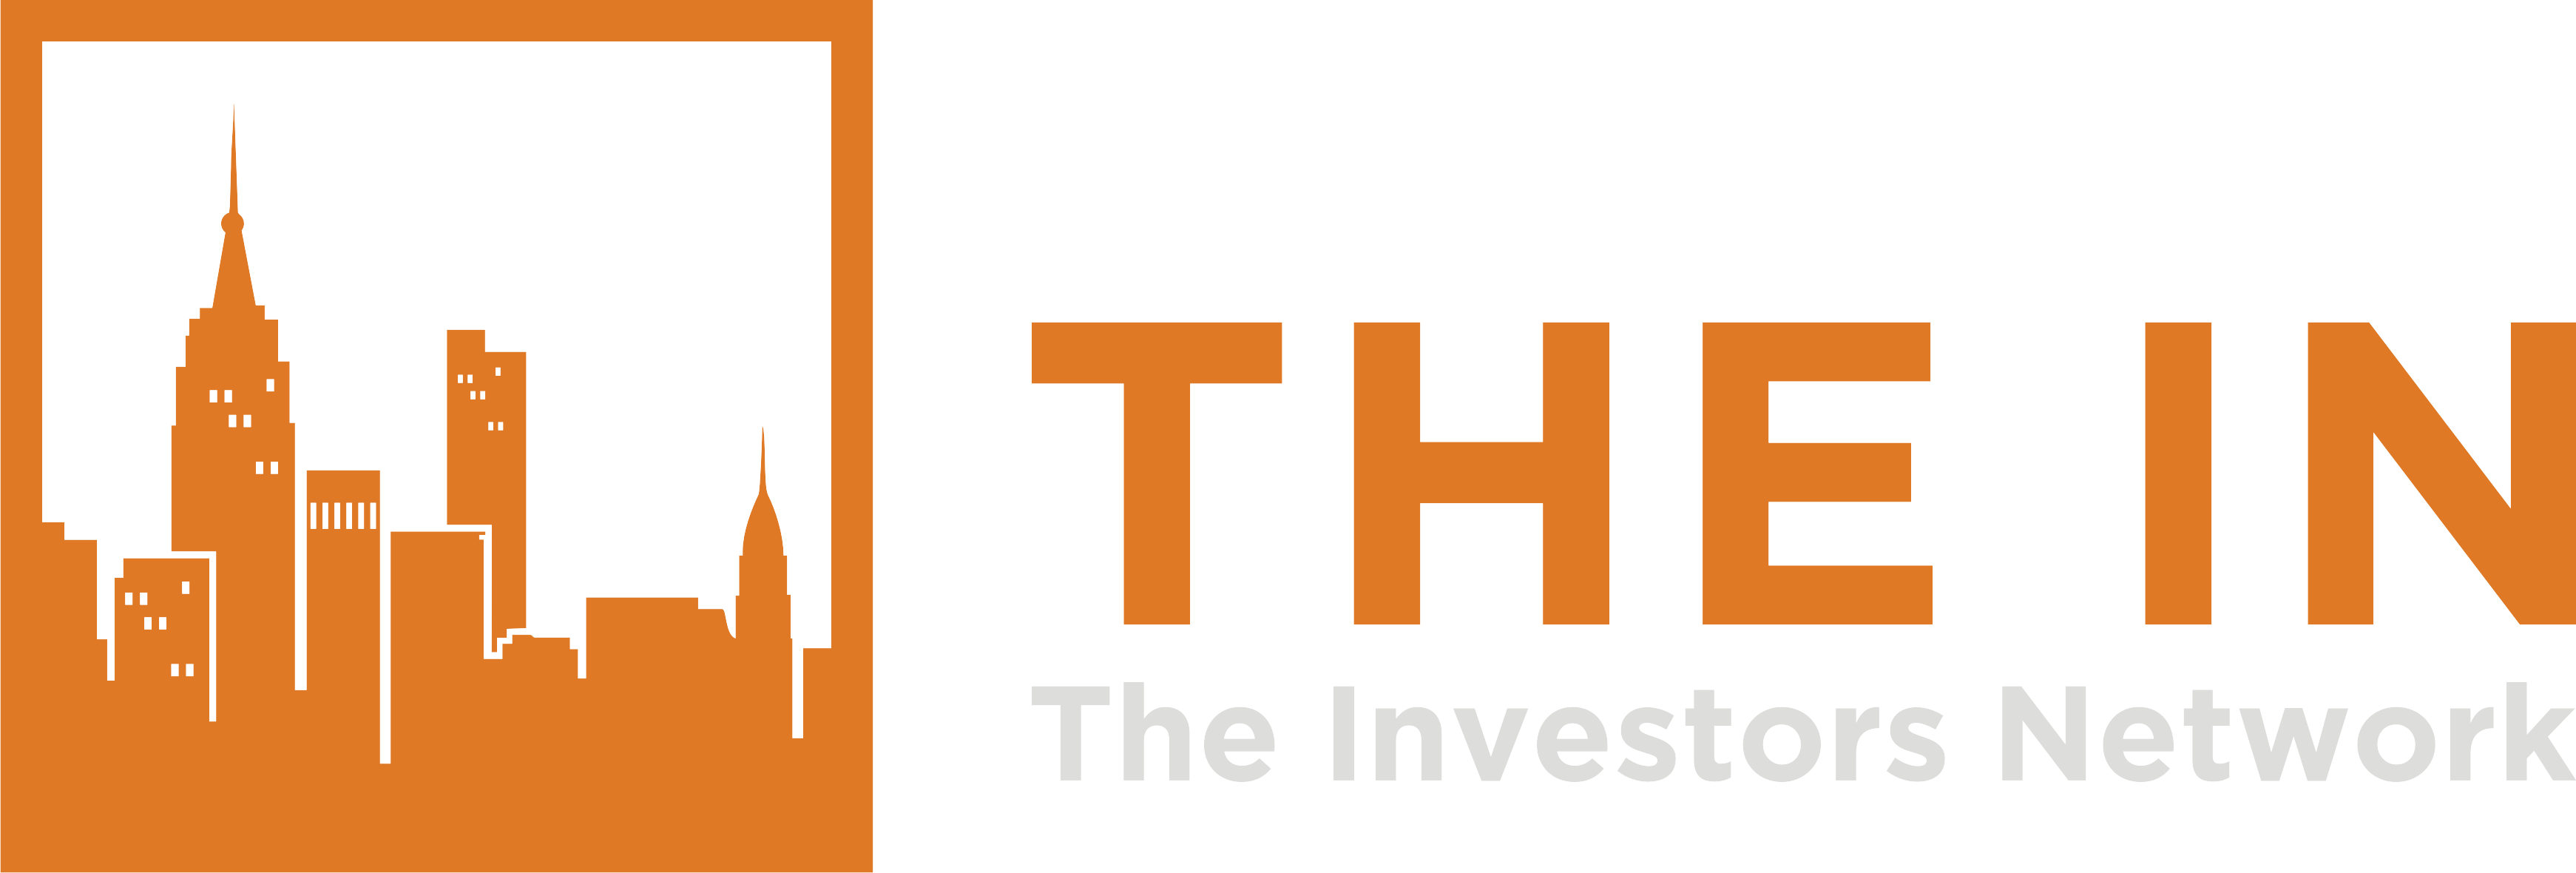 The Investors Network logo